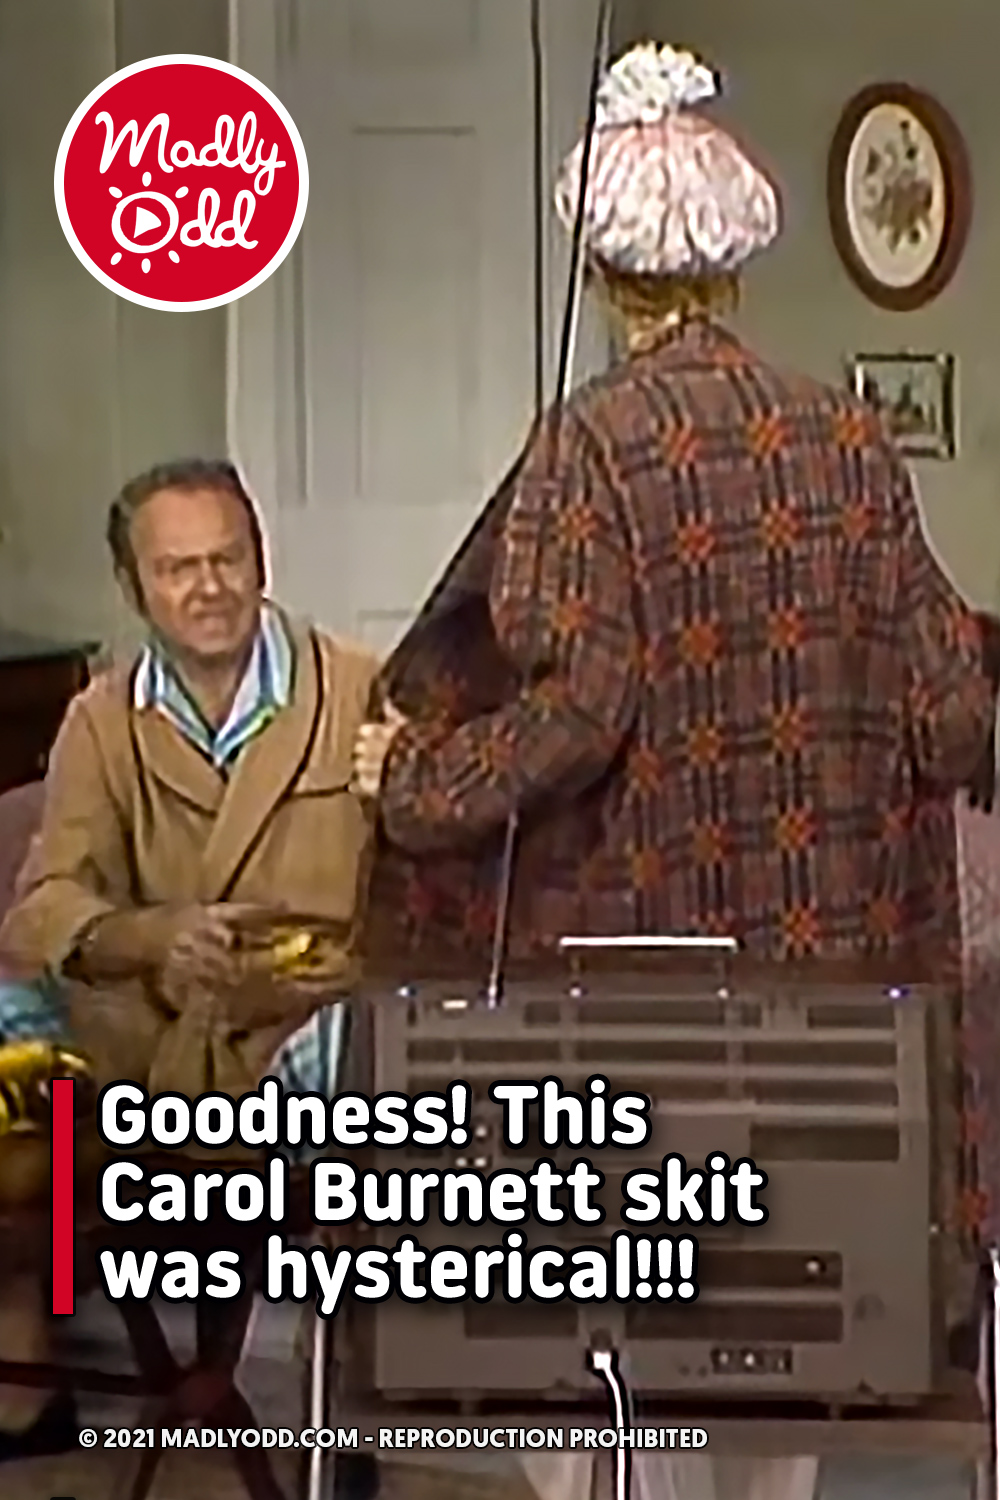 Goodness! This Carol Burnett skit was hysterical!!!